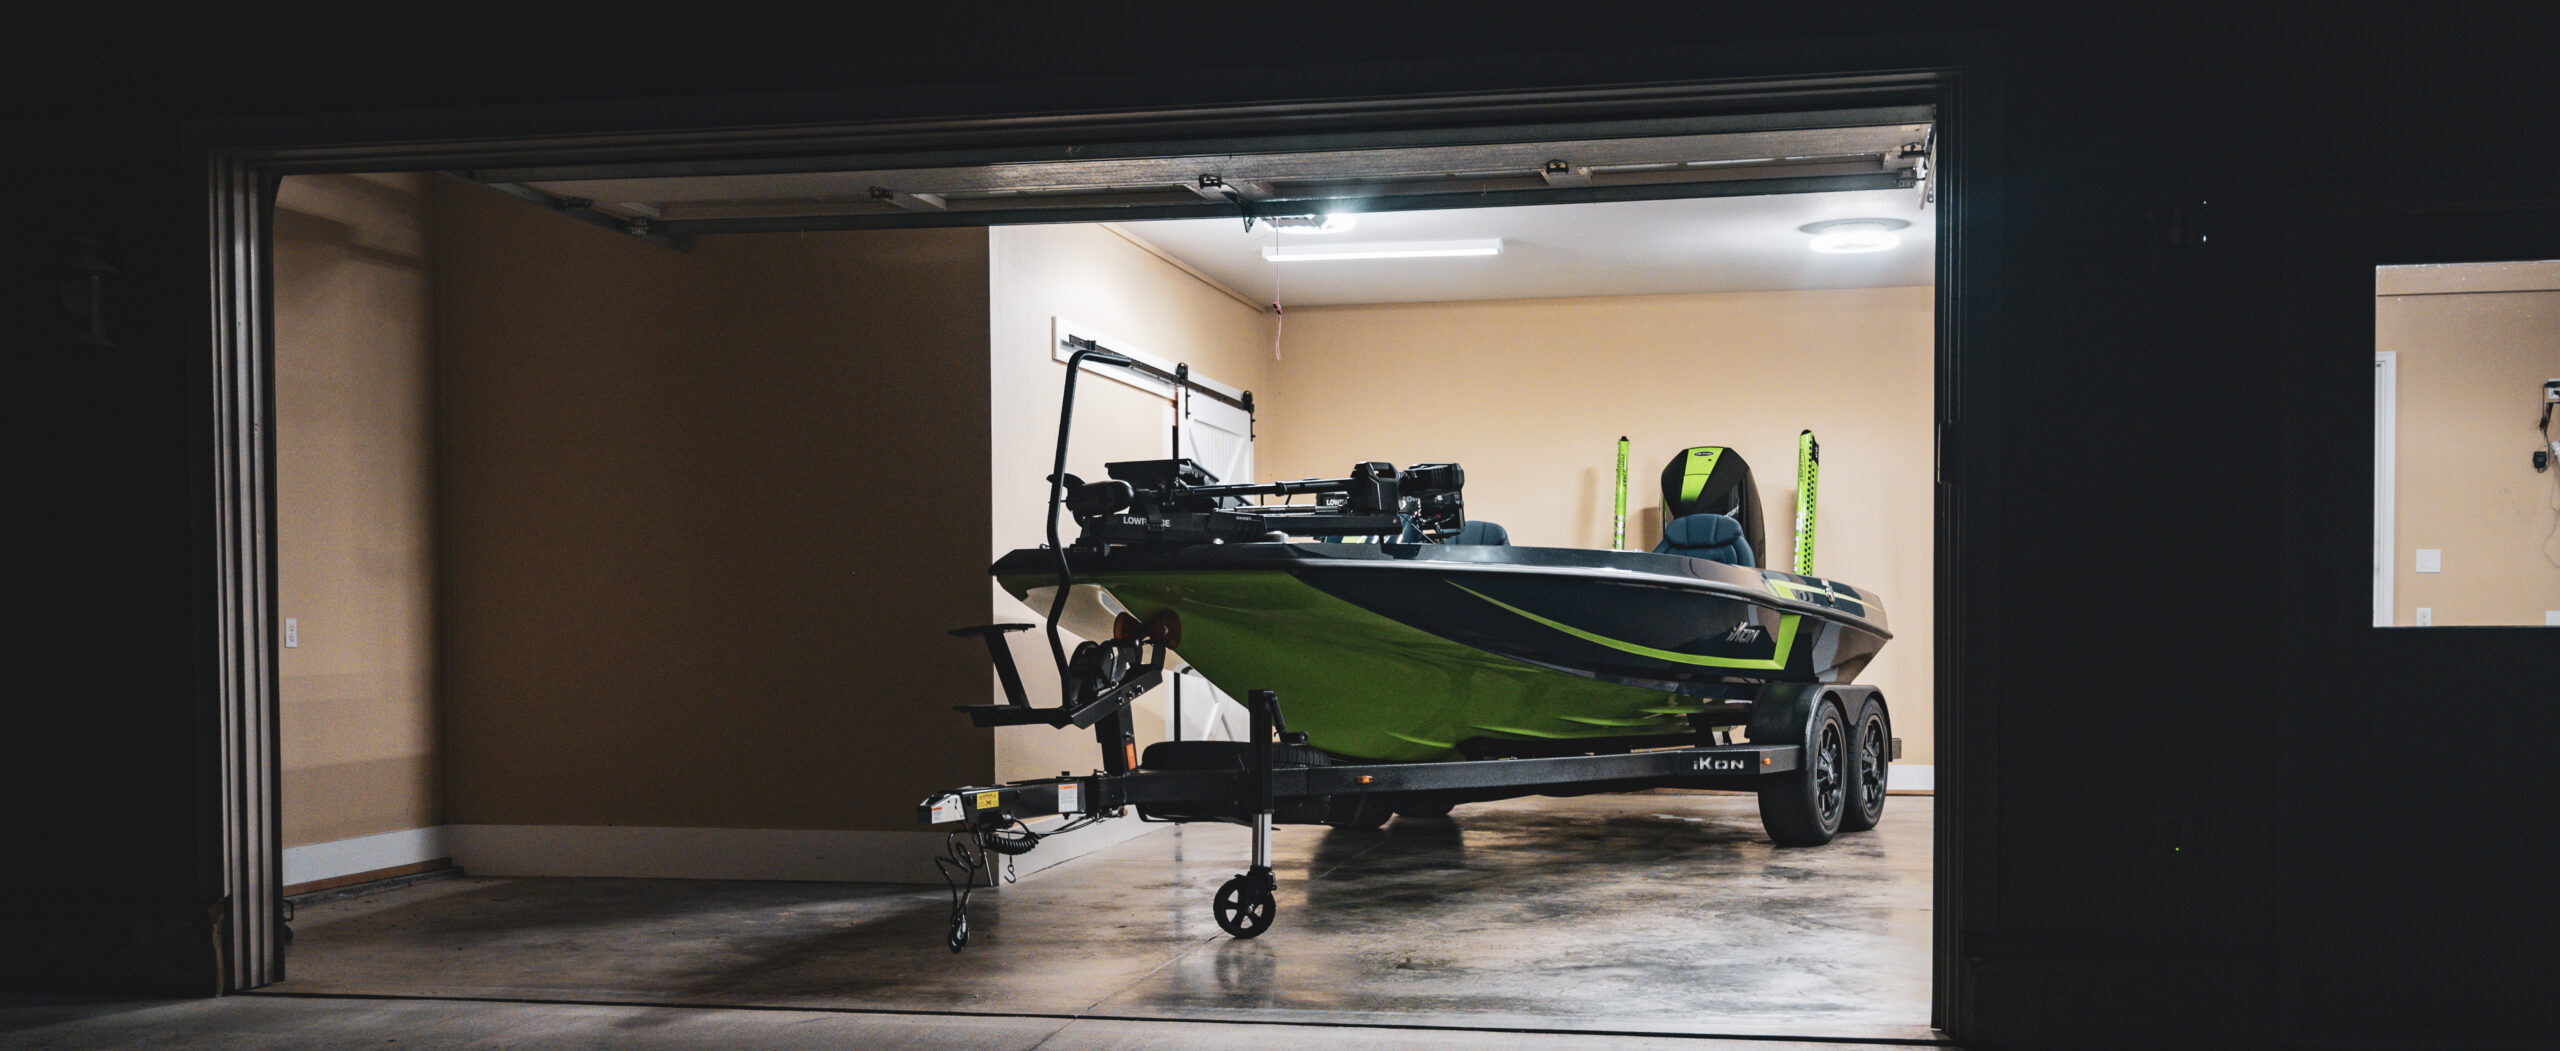 LX20 Bass Boat Sitting In A Garage